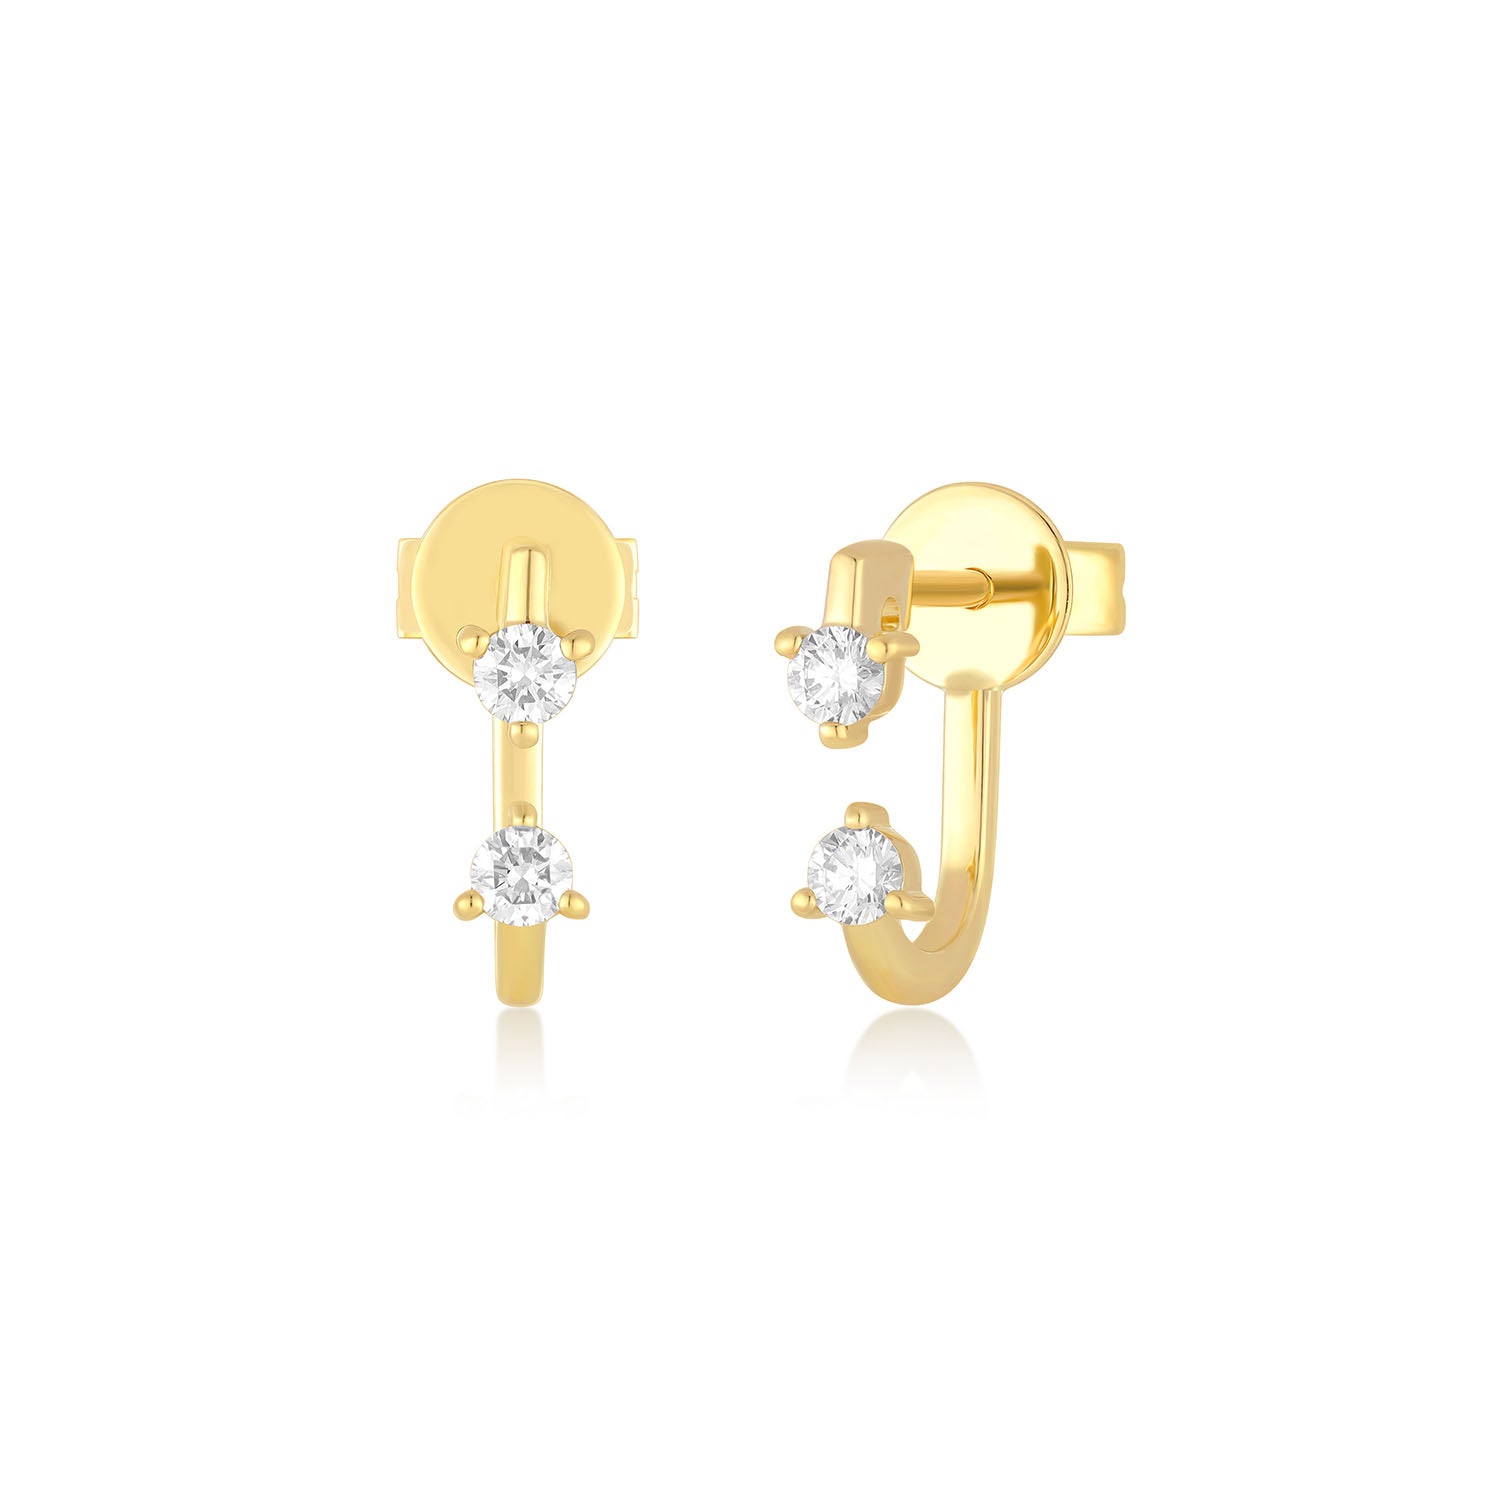 Latest Gold And Diamond Stud Earrings Designs For Kids/Baby Tops/Teenage...  | Diamond, Diamond earrings studs, Stud earrings